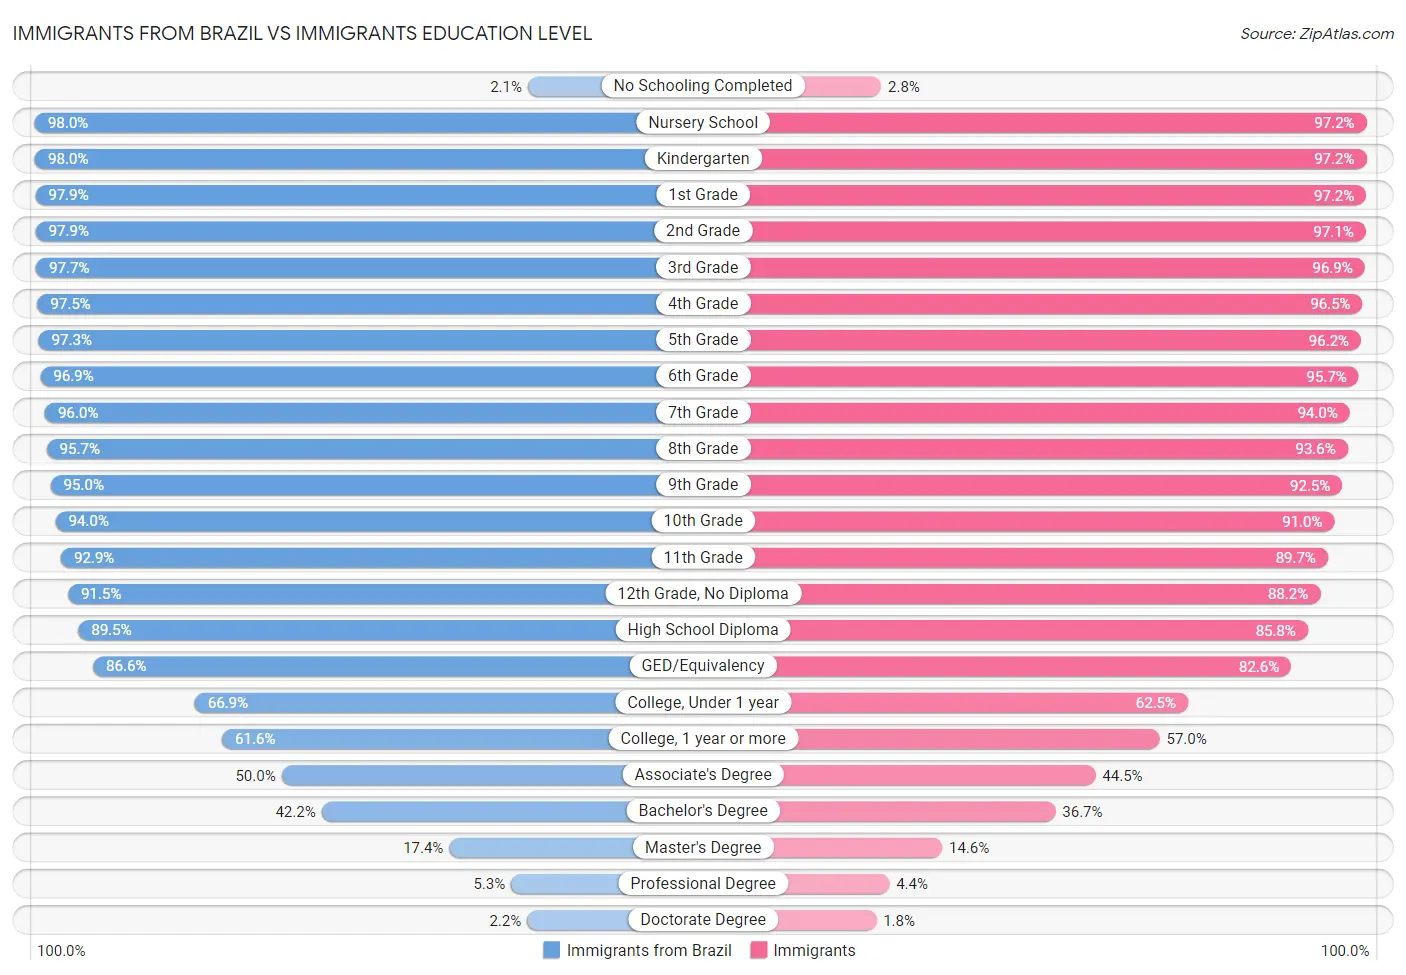 Immigrants from Brazil vs Immigrants Education Level